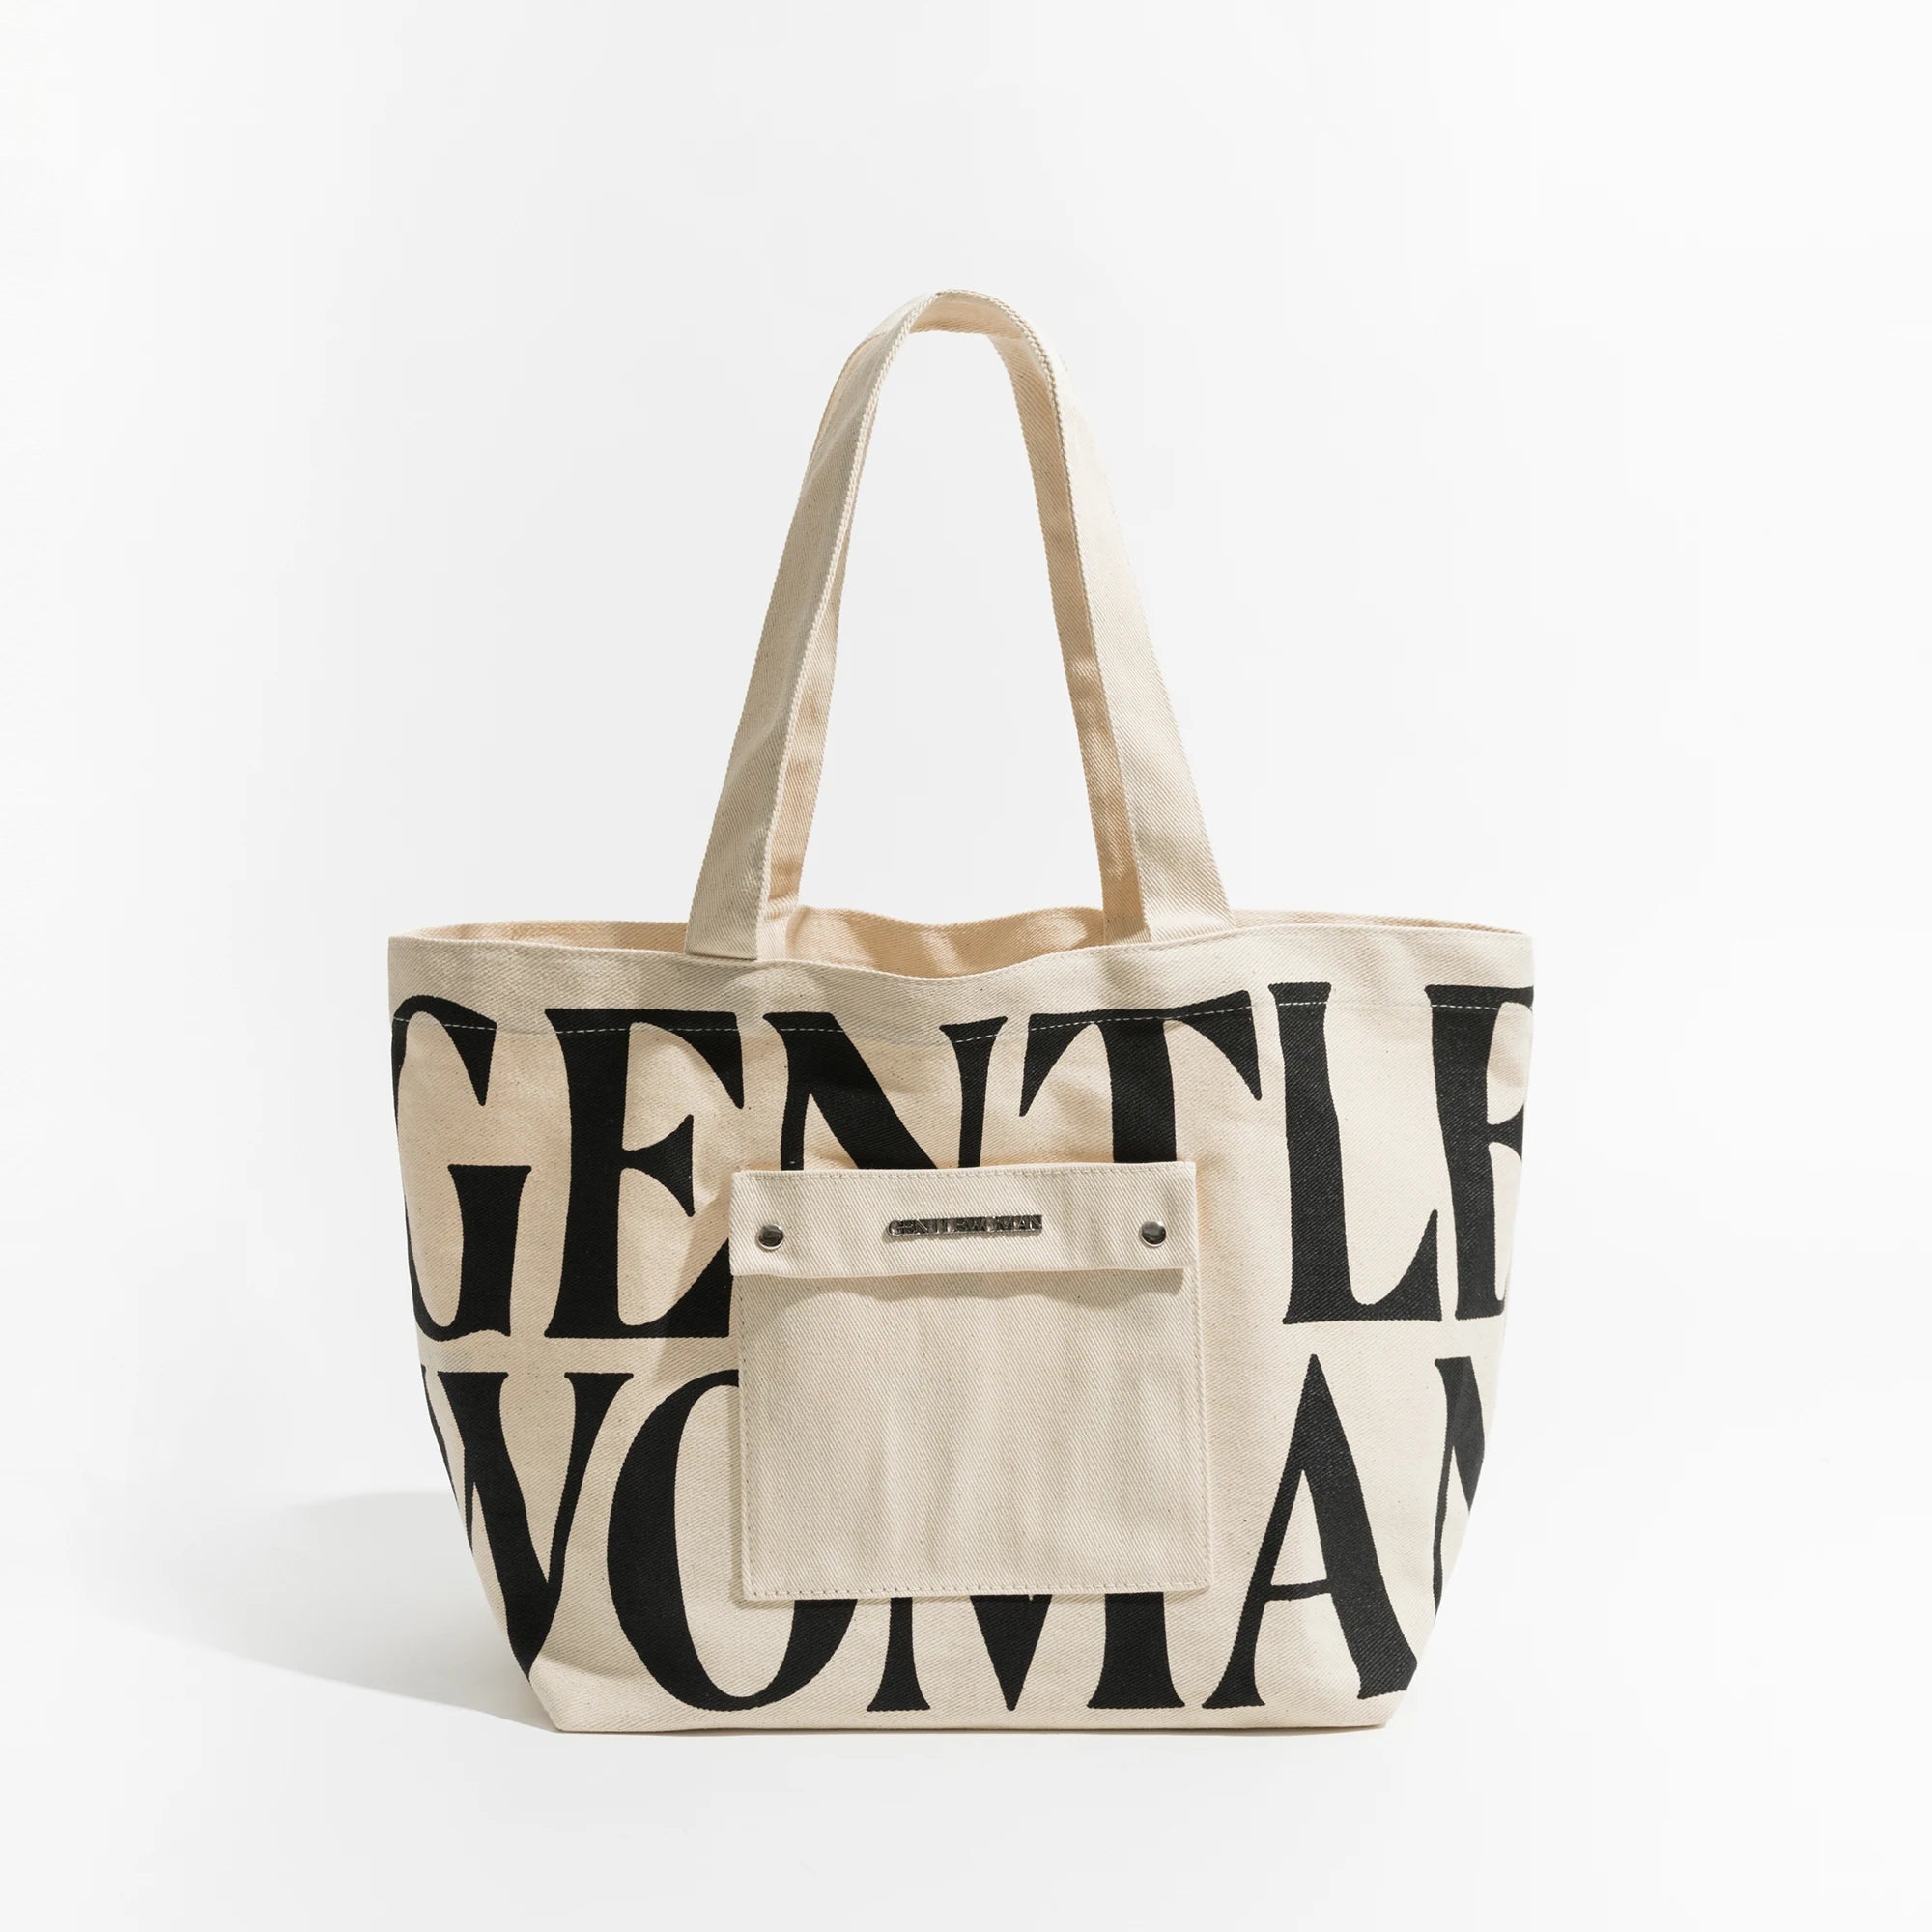 Gentle Women Canvas Beach Tote Bag